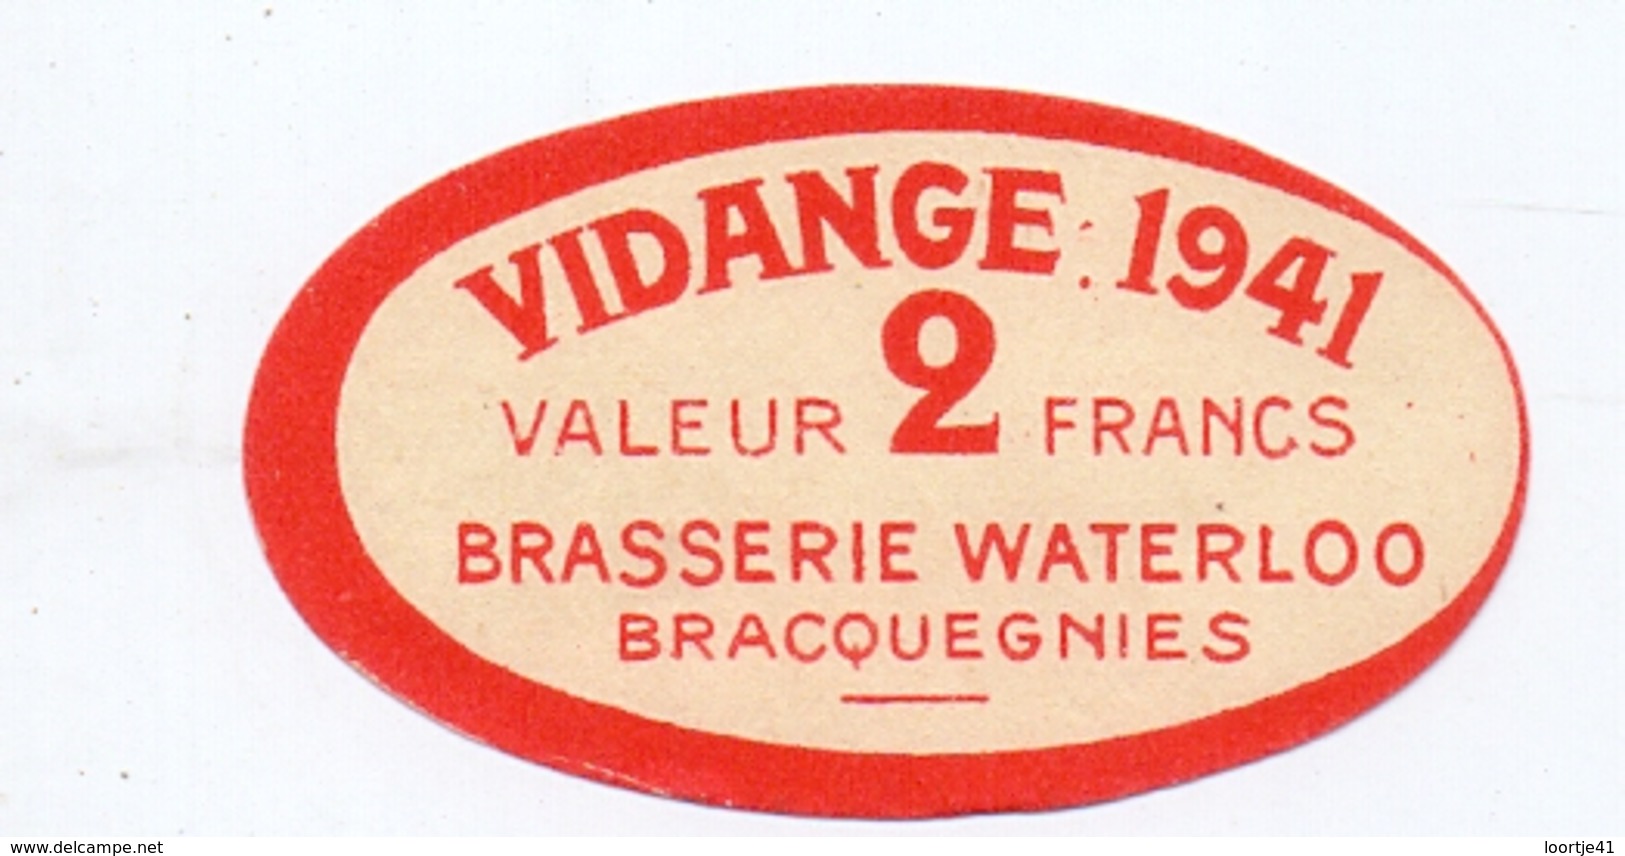 Etiket Etiquette - Bier - Bière - Vidange 1941 - 2 Francs - Brouwerij Brasserie Waterloo - Bracquegnies - Bière